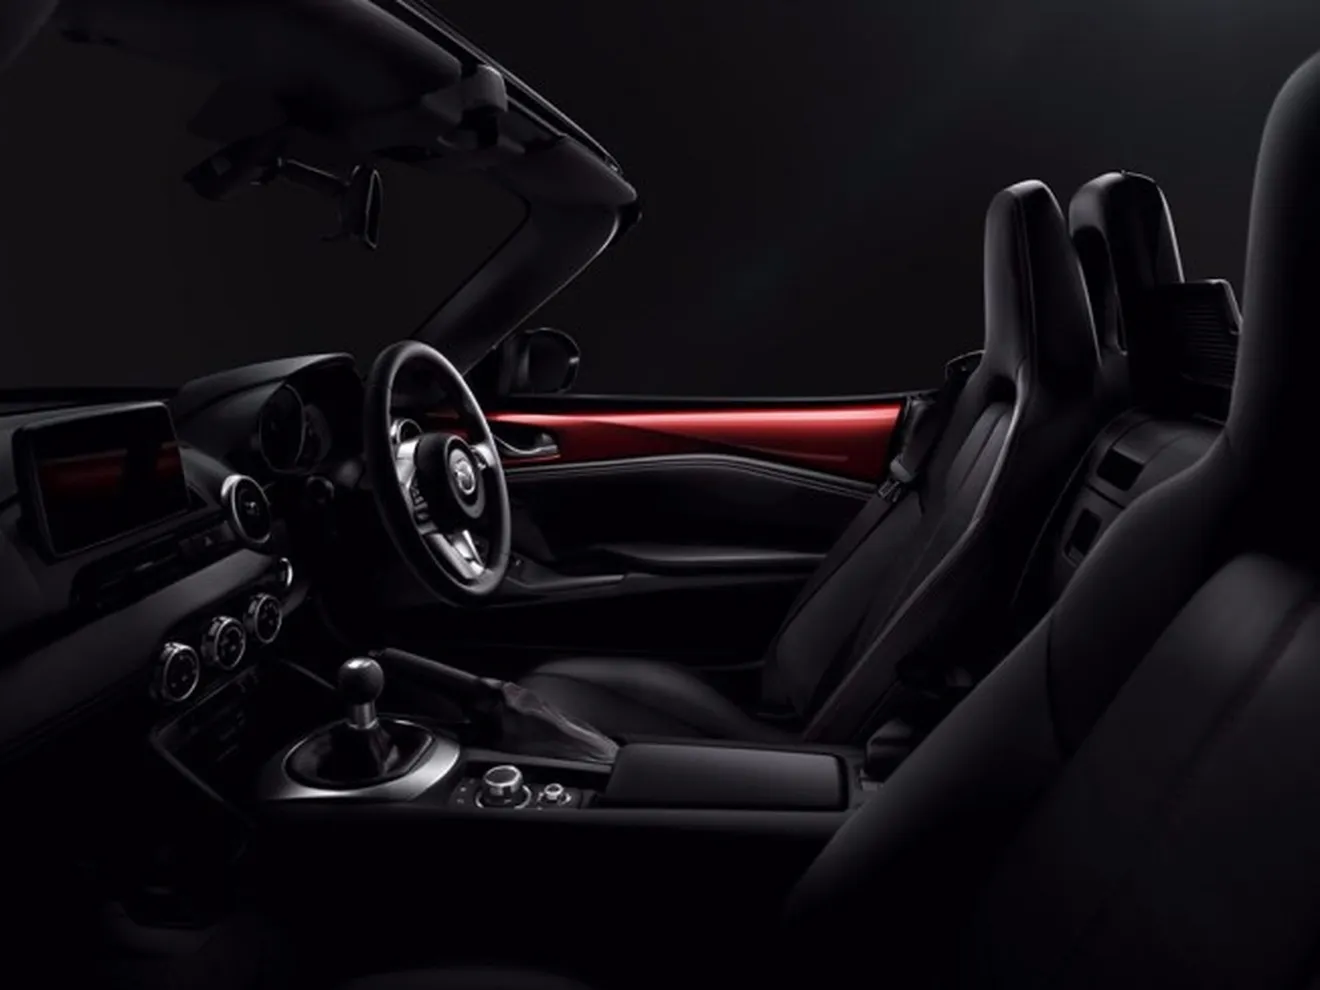 Mazda MX-5 - interior